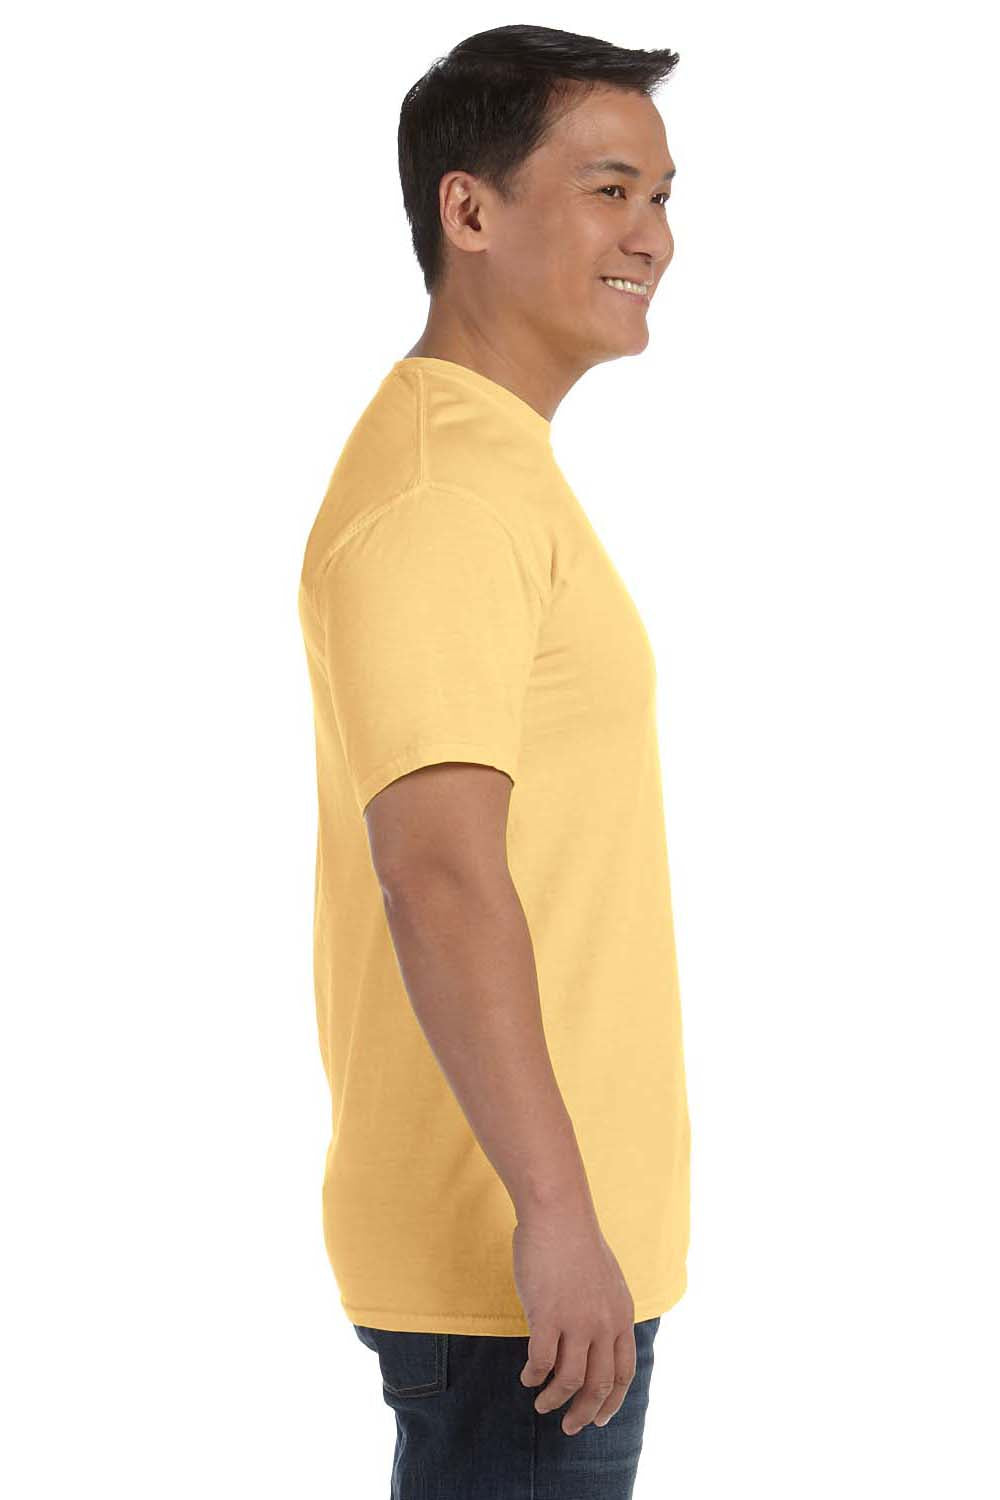 Comfort Colors C1717 Mens Short Sleeve Crewneck T-Shirt Butter Yellow Side